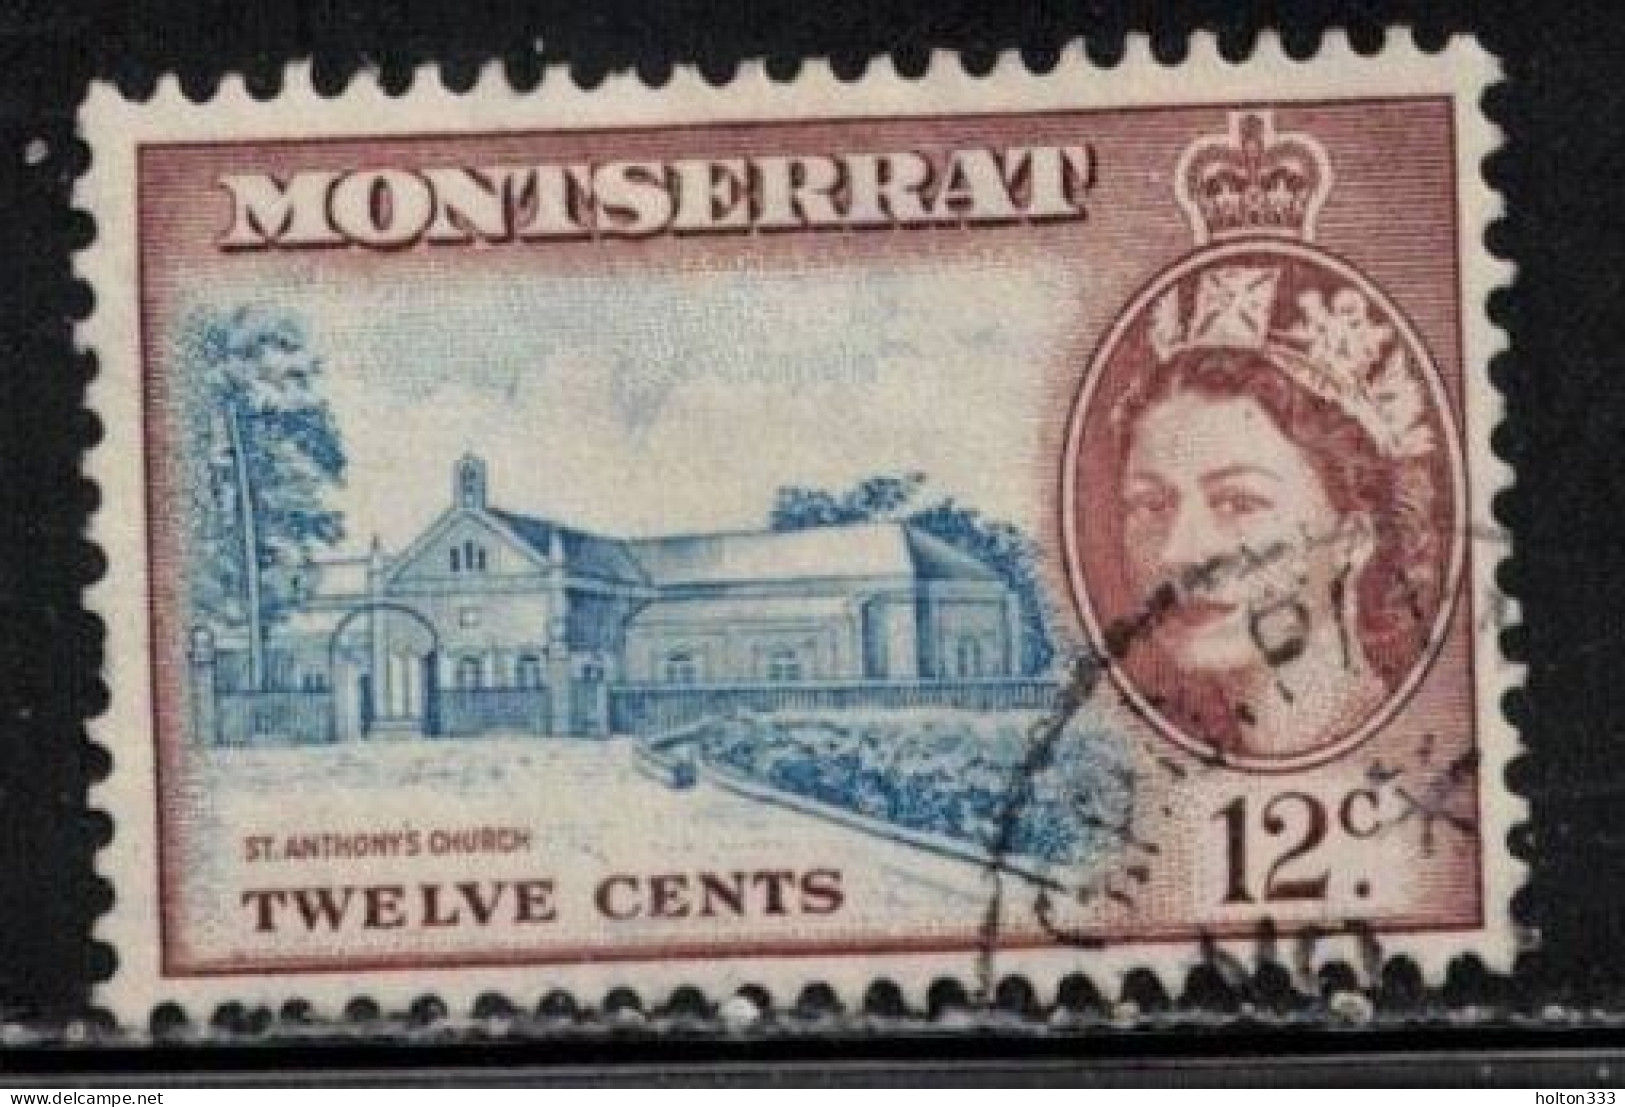 MONTSERRAT Scott # 136 Used - QEII & St Anthony's Church - Montserrat